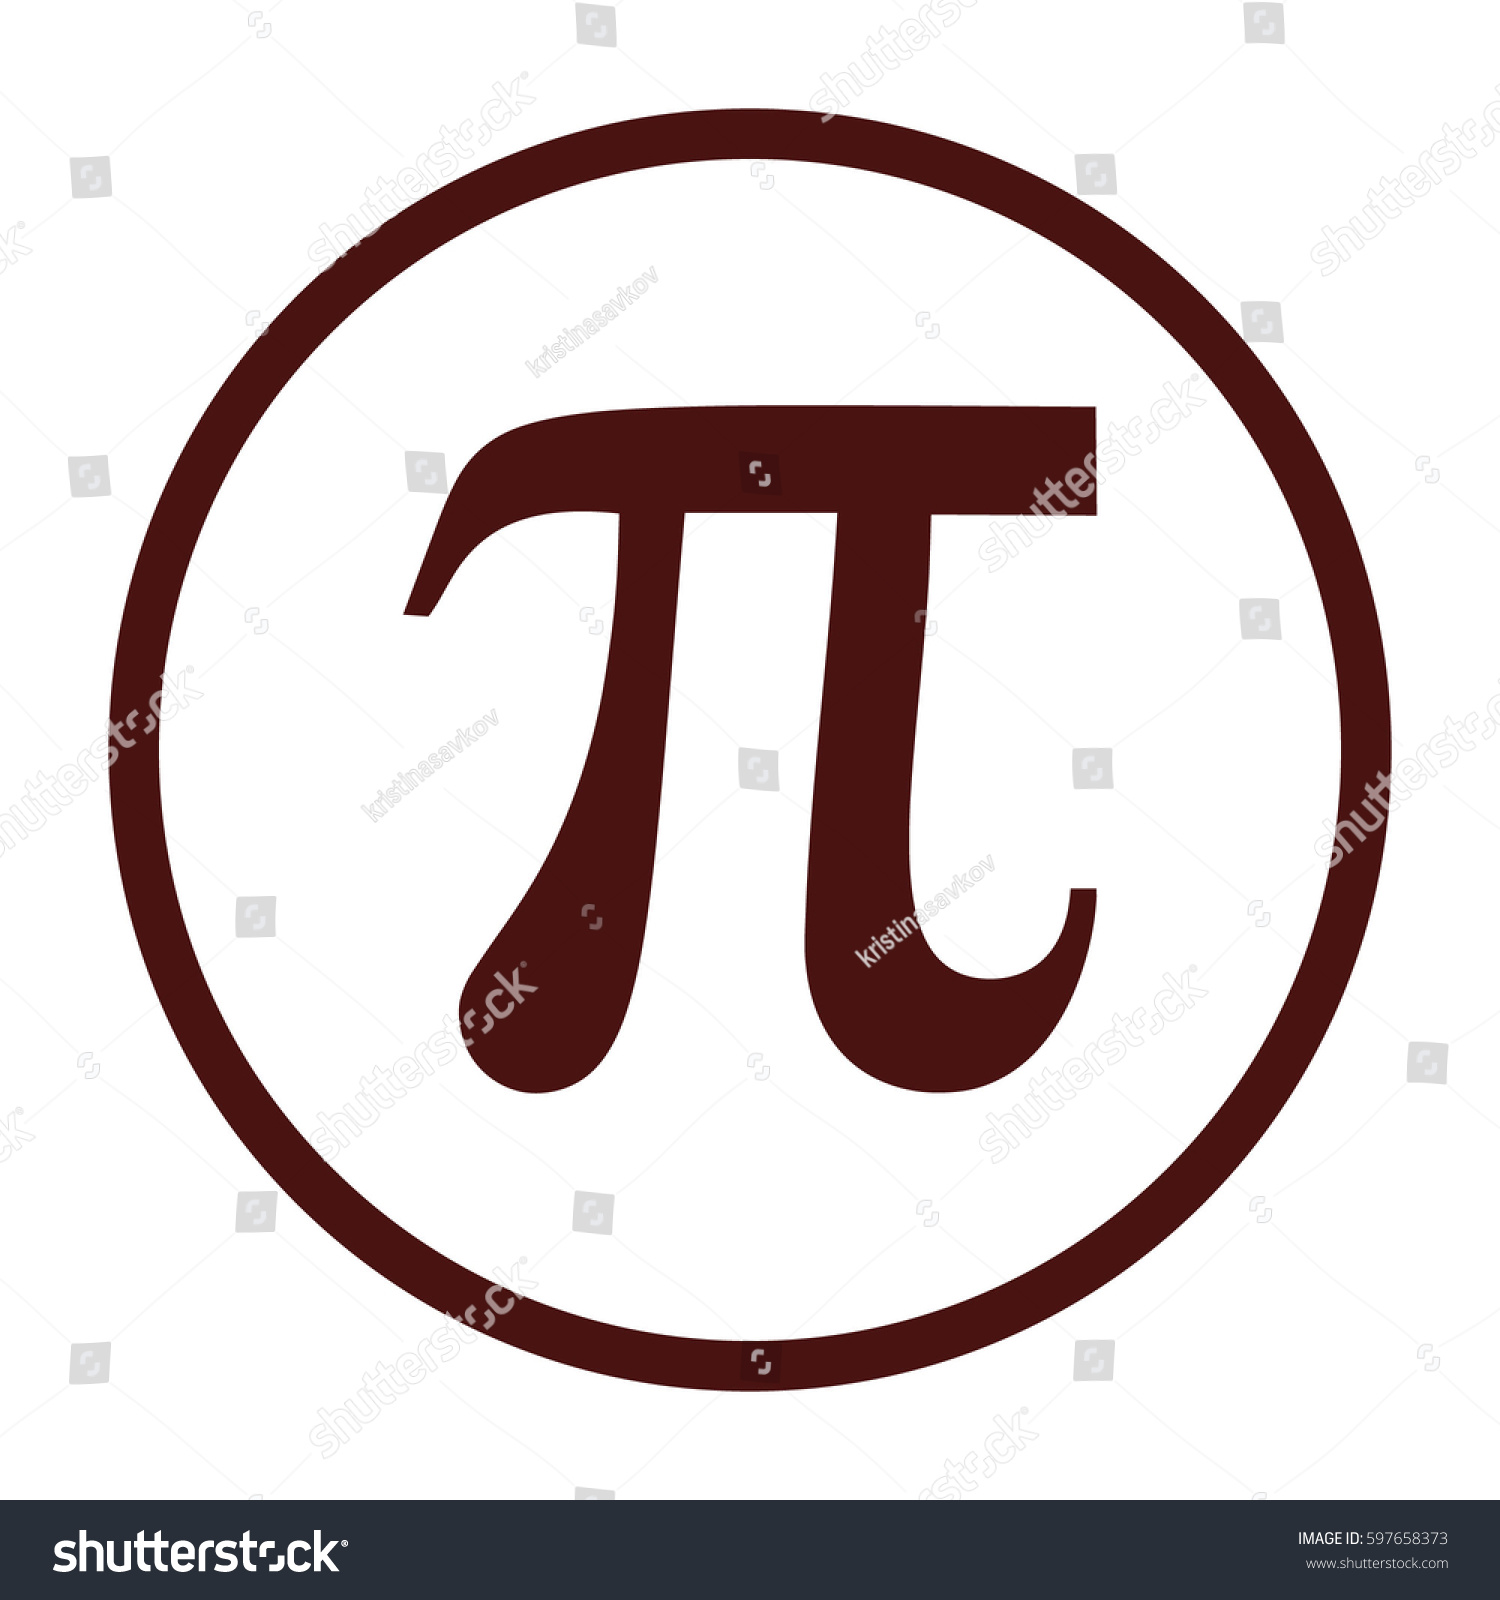 Pi vector icon. Large brown circle #597658373